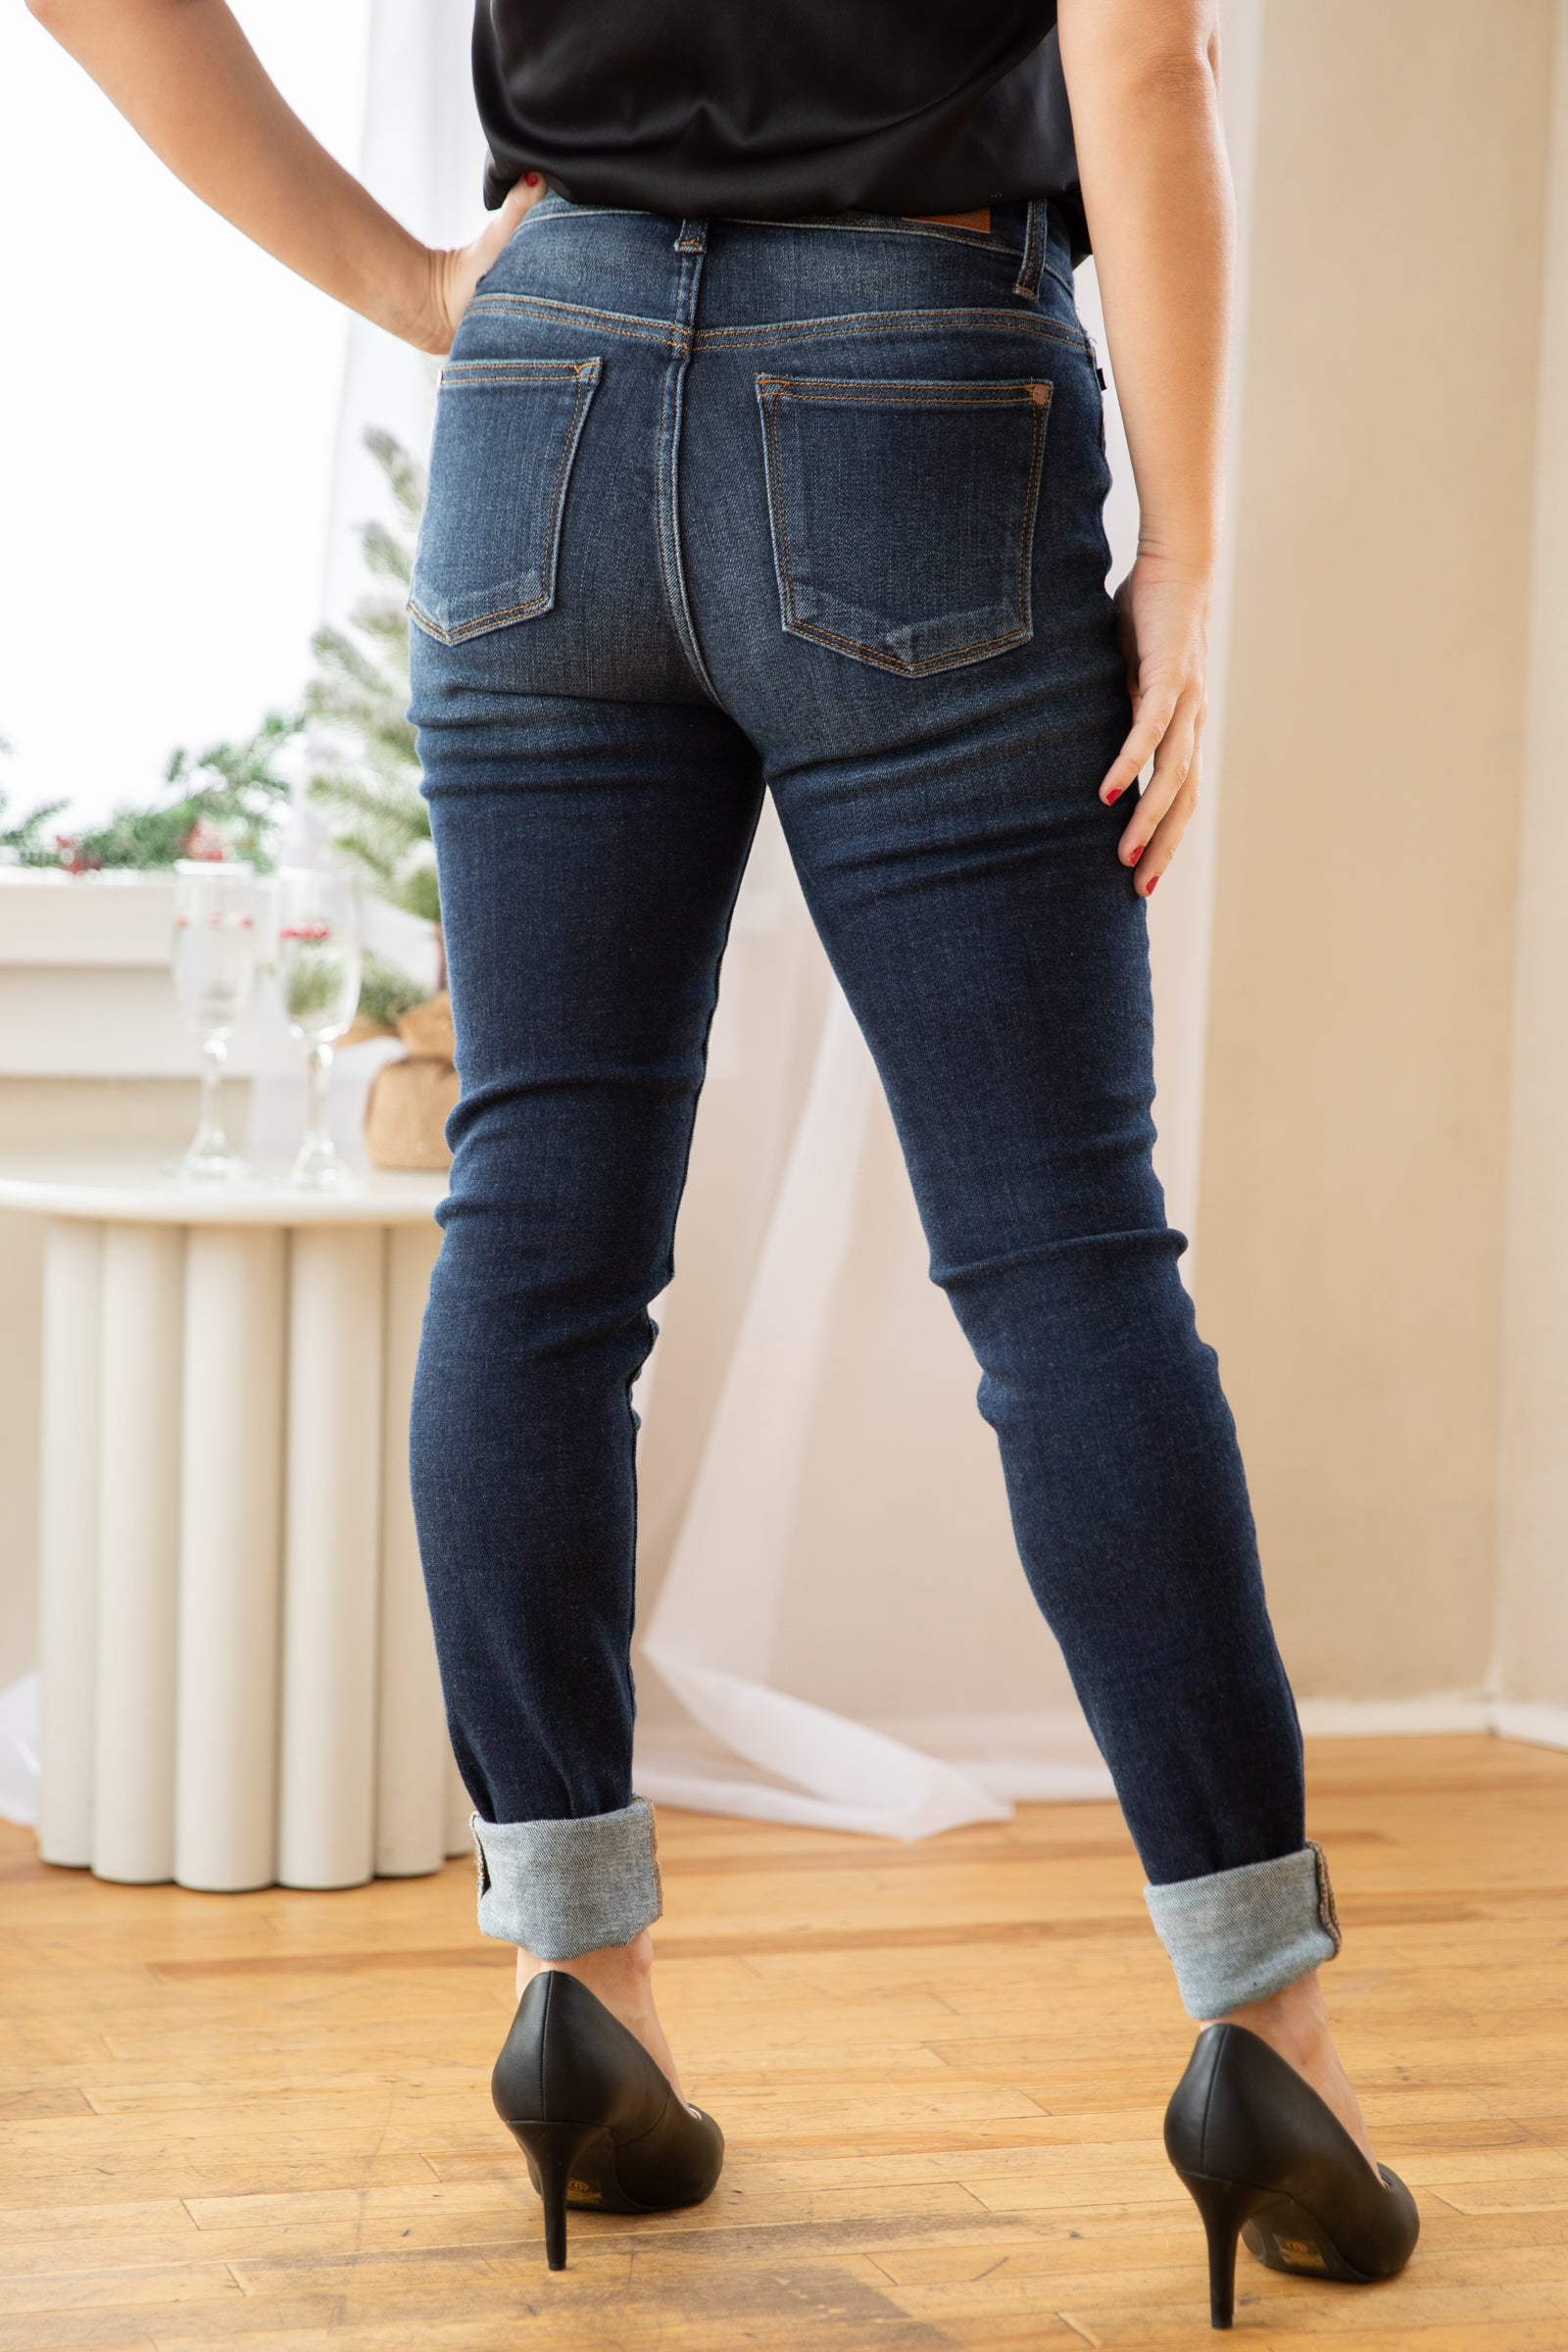 Judy Blue Dark Wash Long Inseam Skinny Jeans